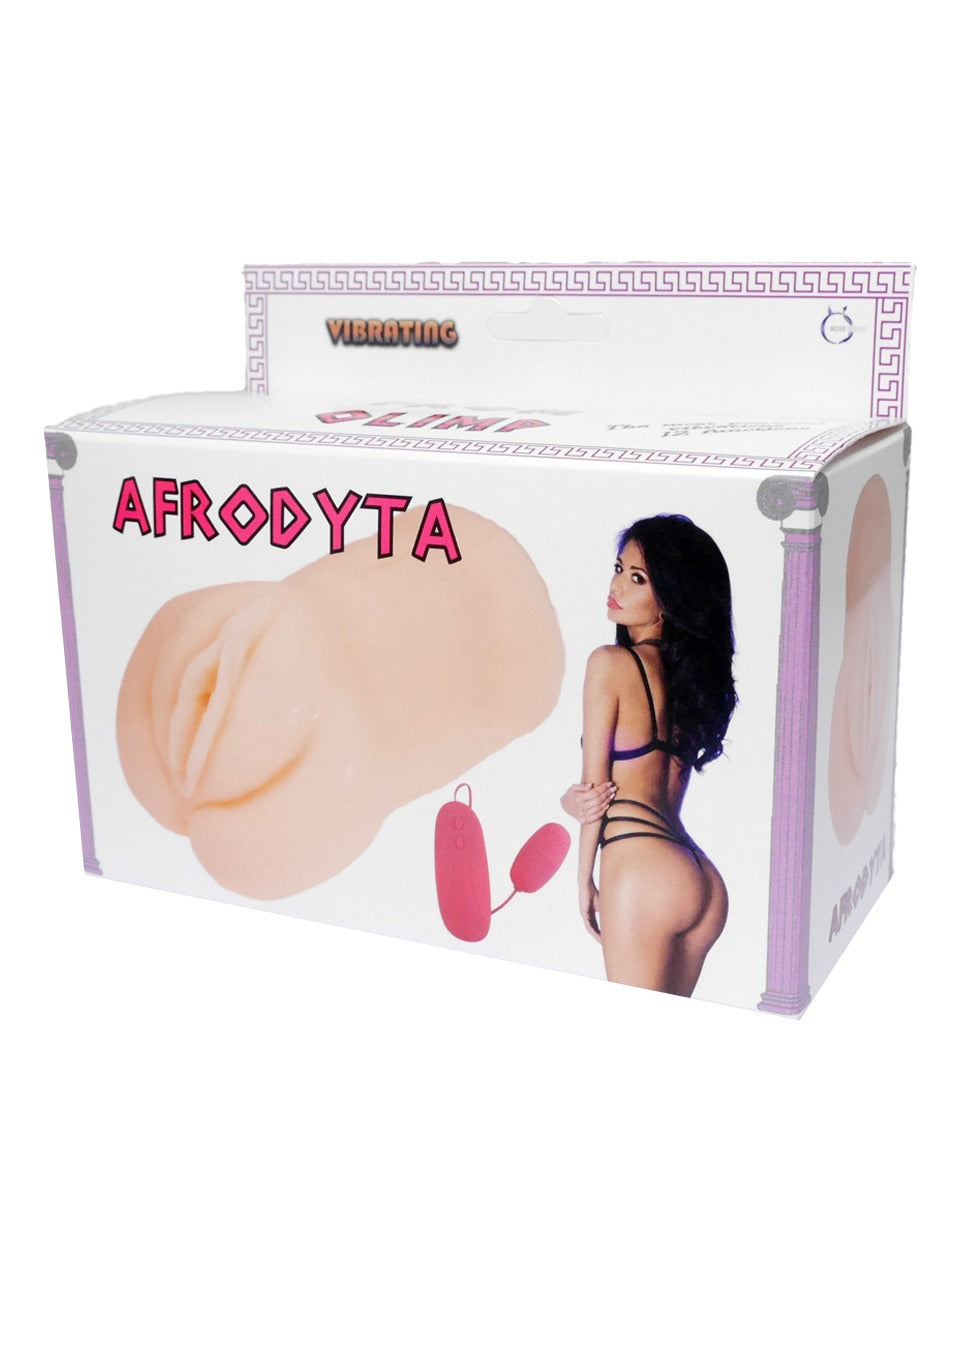 Bossoftoys - 26-00008 - Afrodyta - Masturbator - Vibrating - Vagina - heavy 640 grams